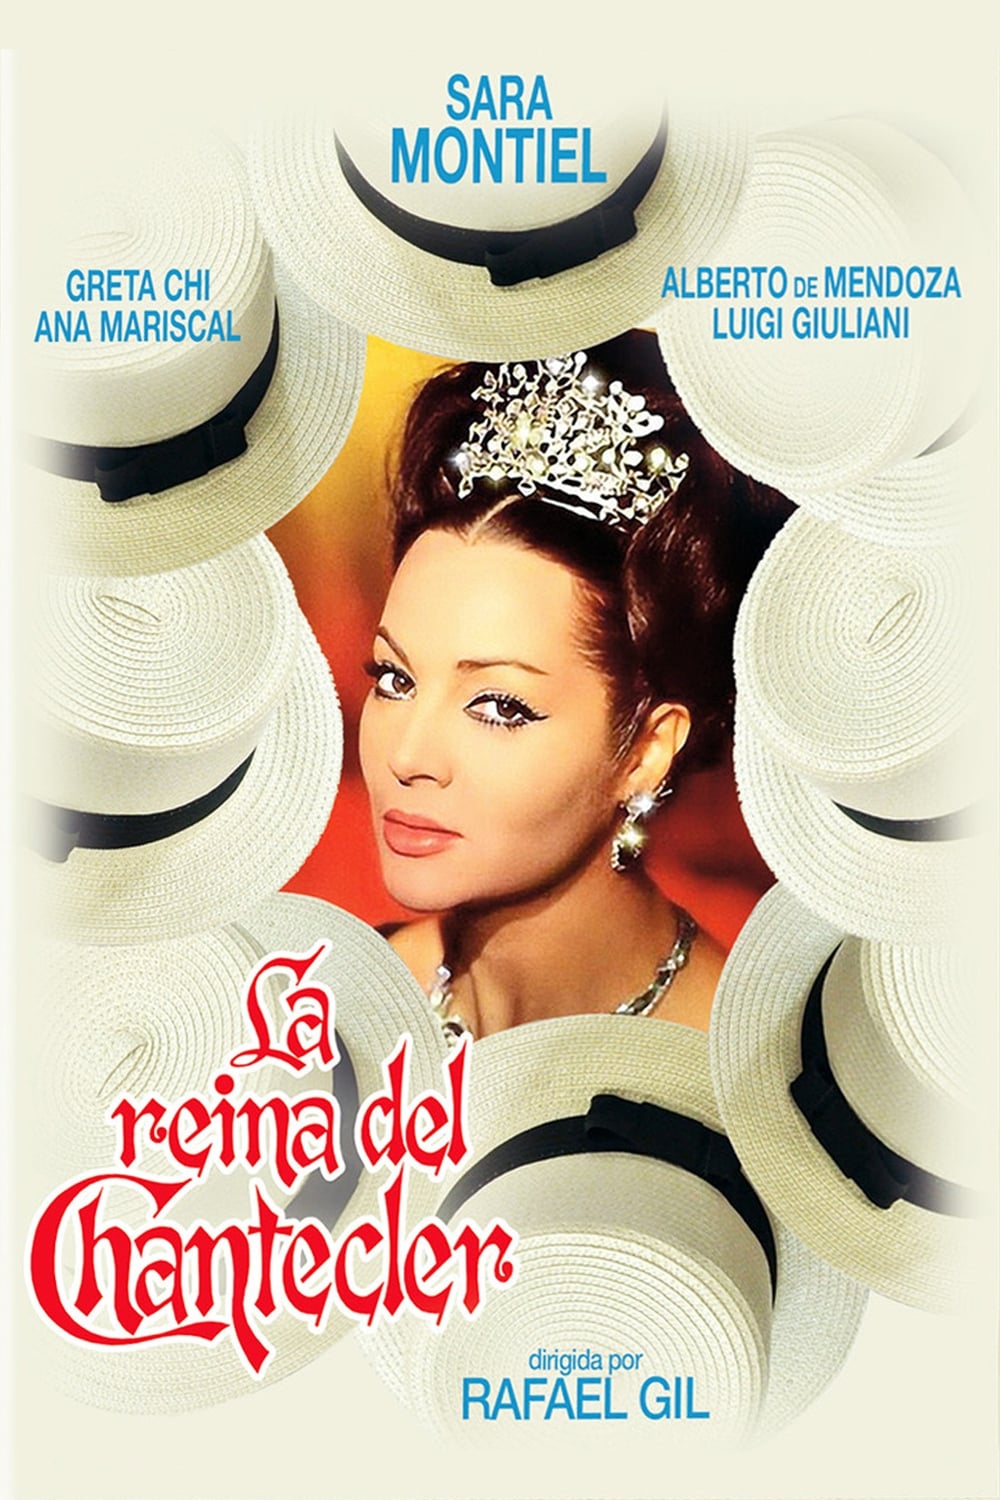 Queen of the Chantecler (1962)